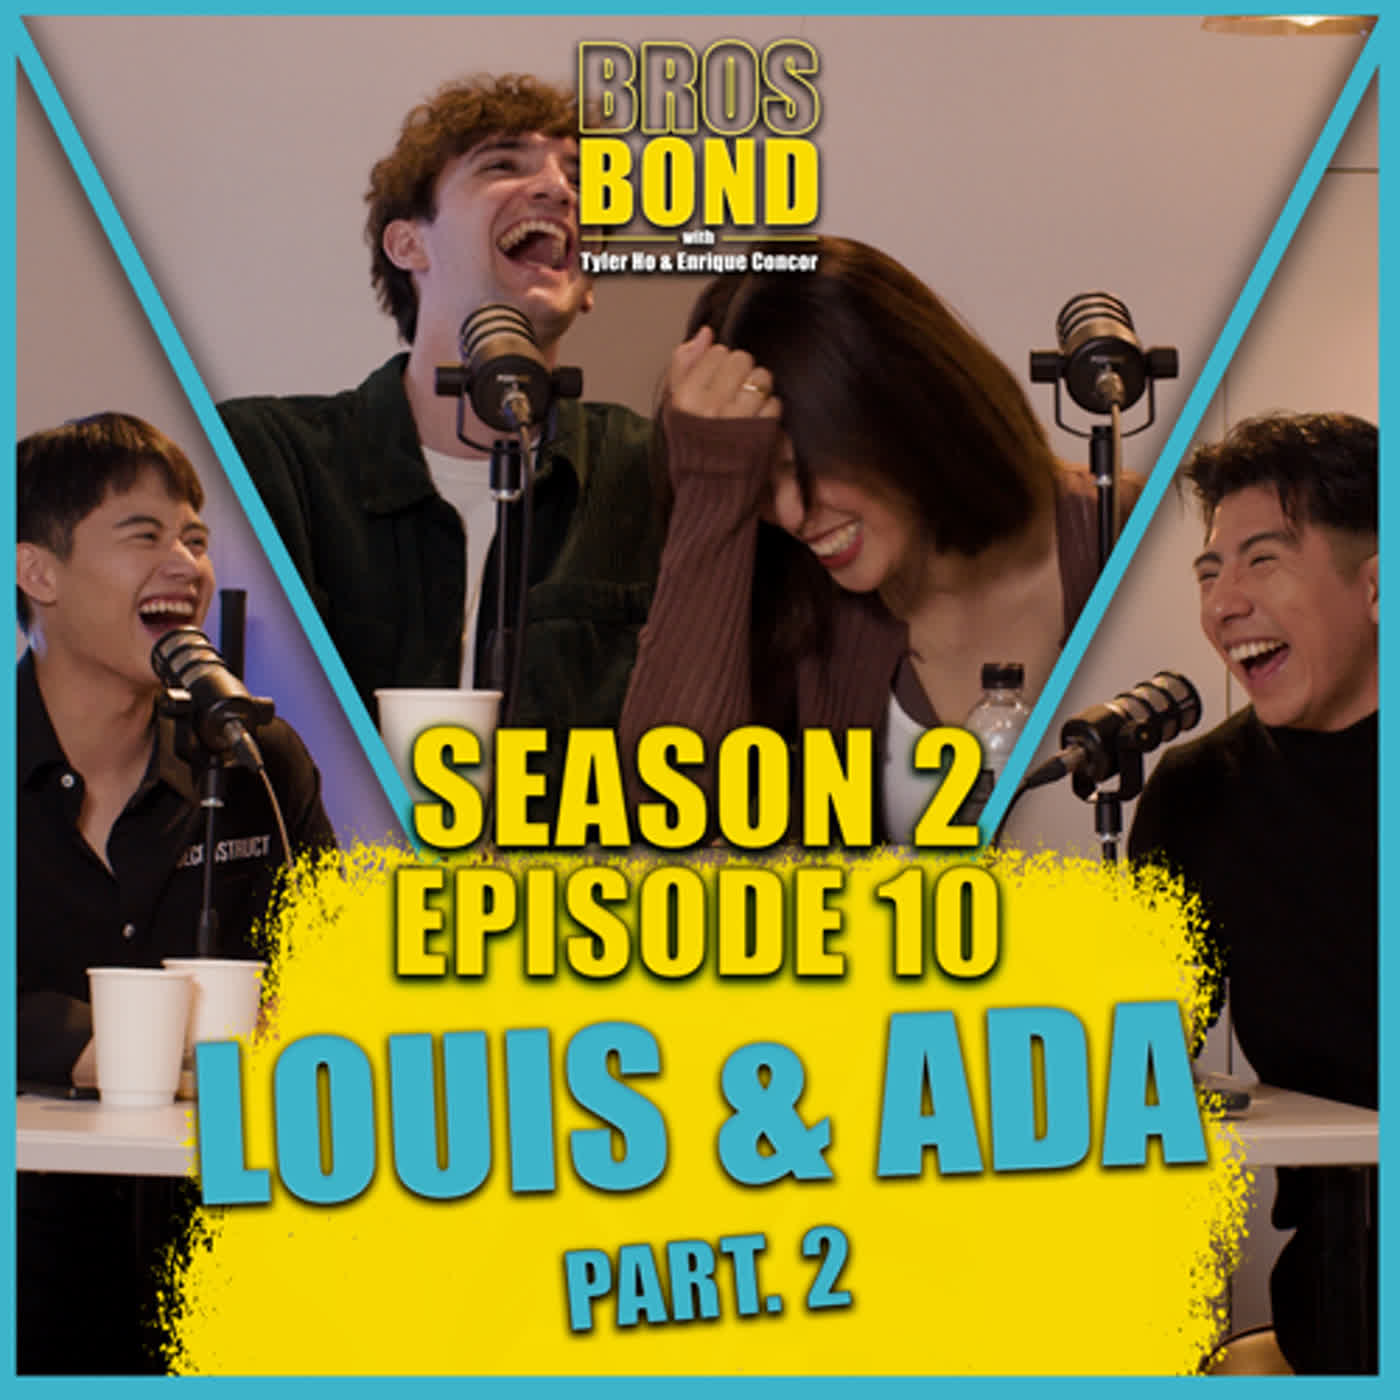 EP 10【最可愛情侶Louis & Ada, The Cutest Couple Part 2】S2